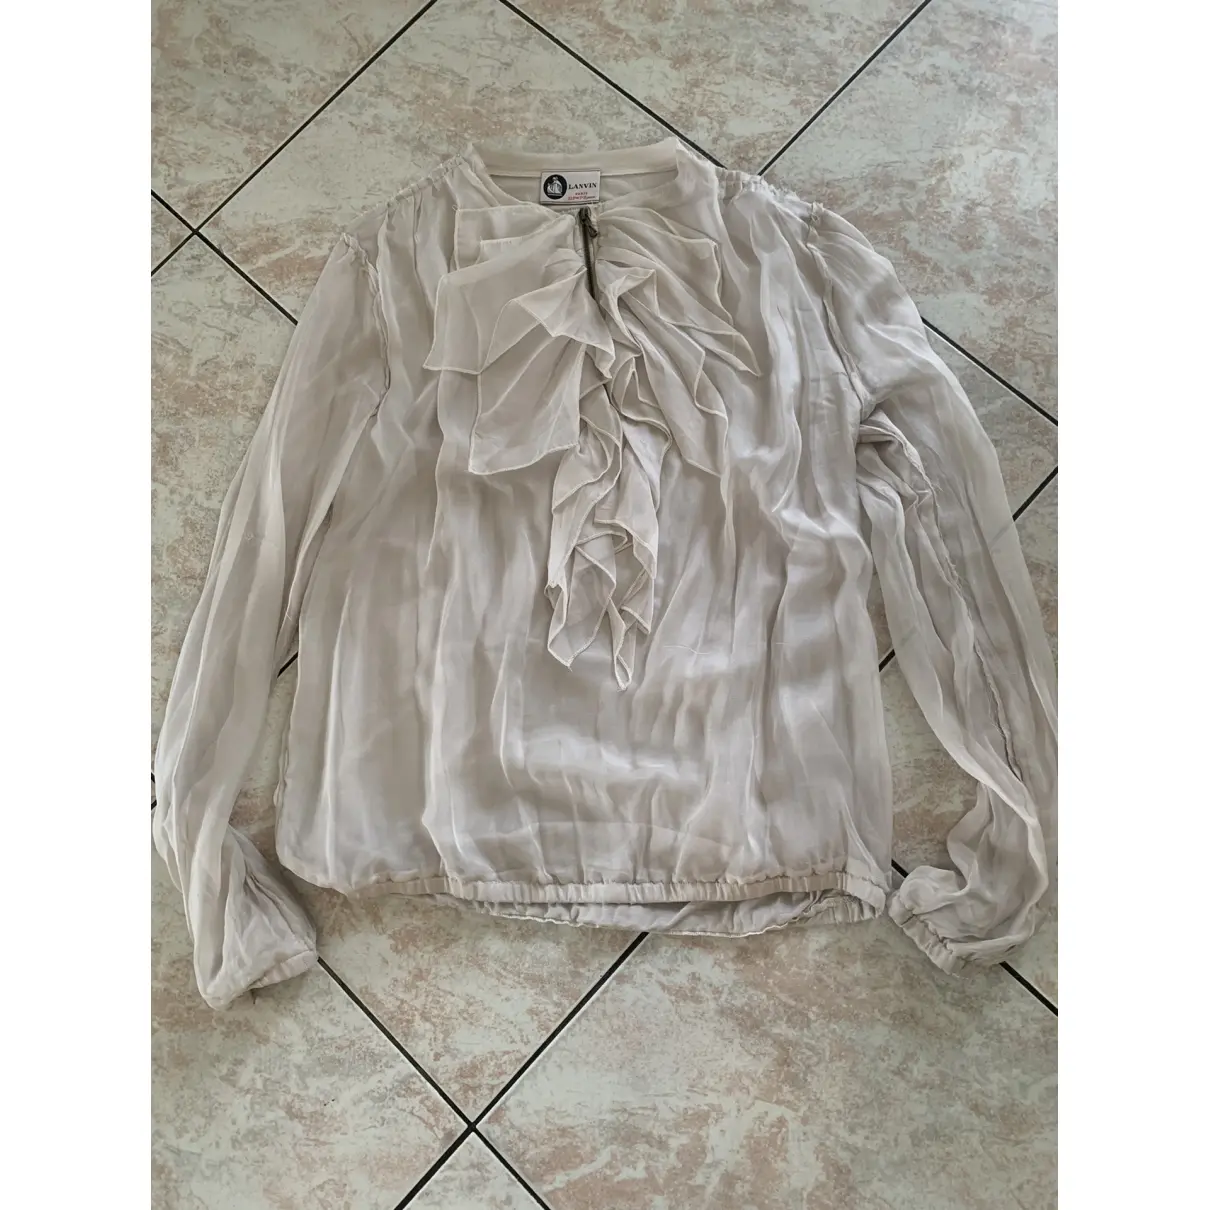 Buy Lanvin Silk blouse online